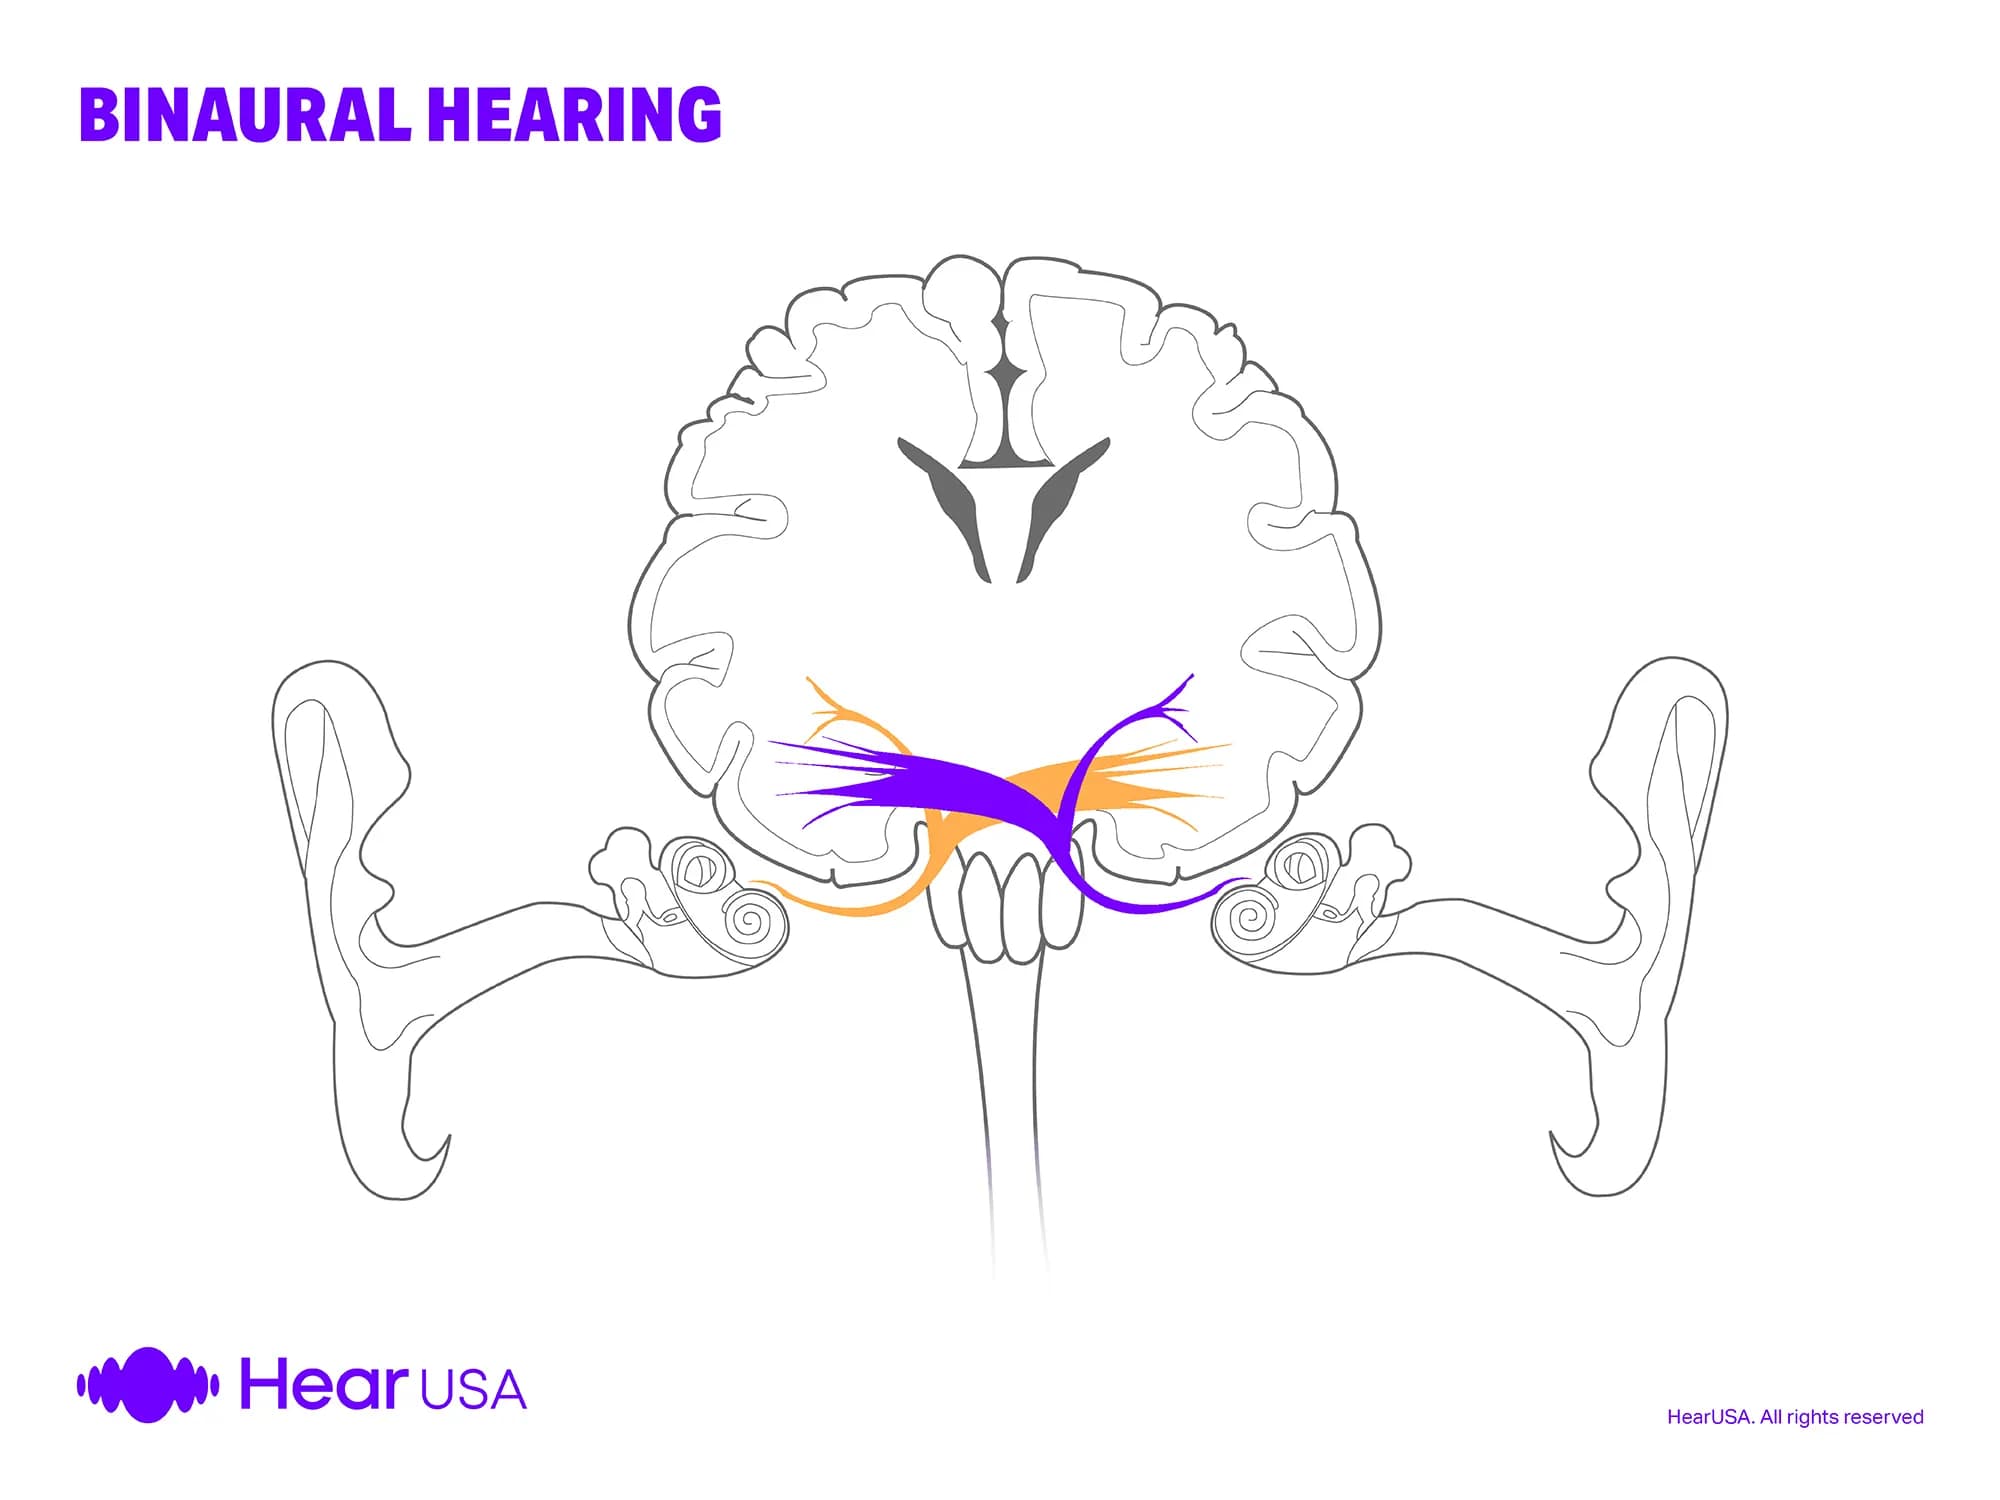 Binaural hearing